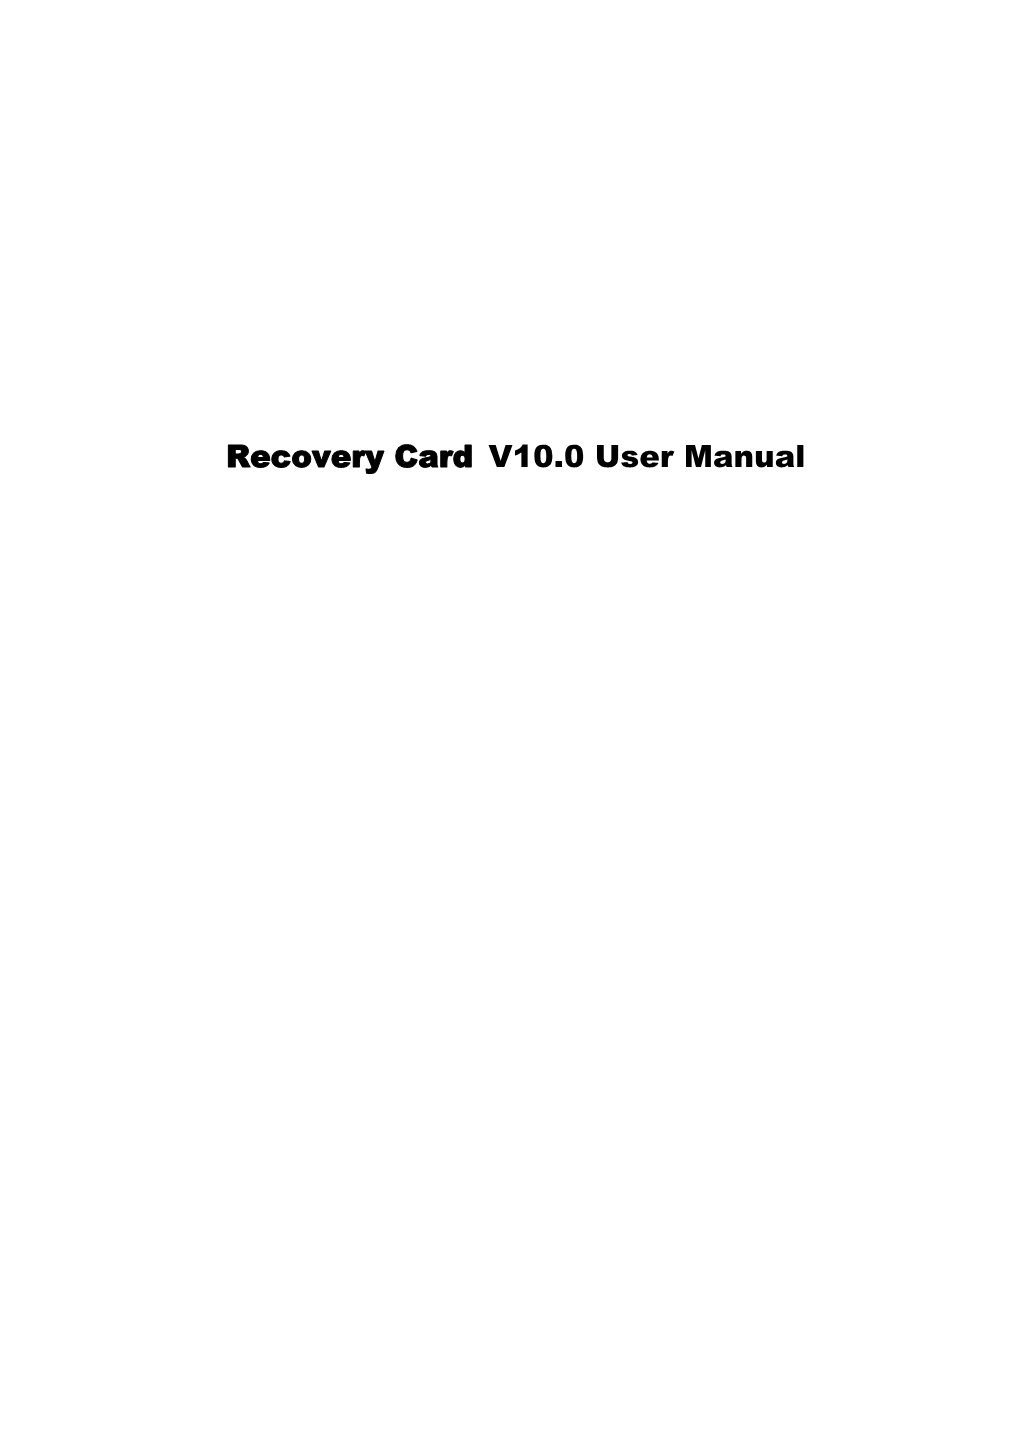 Recovery Card V10.0 User Manual